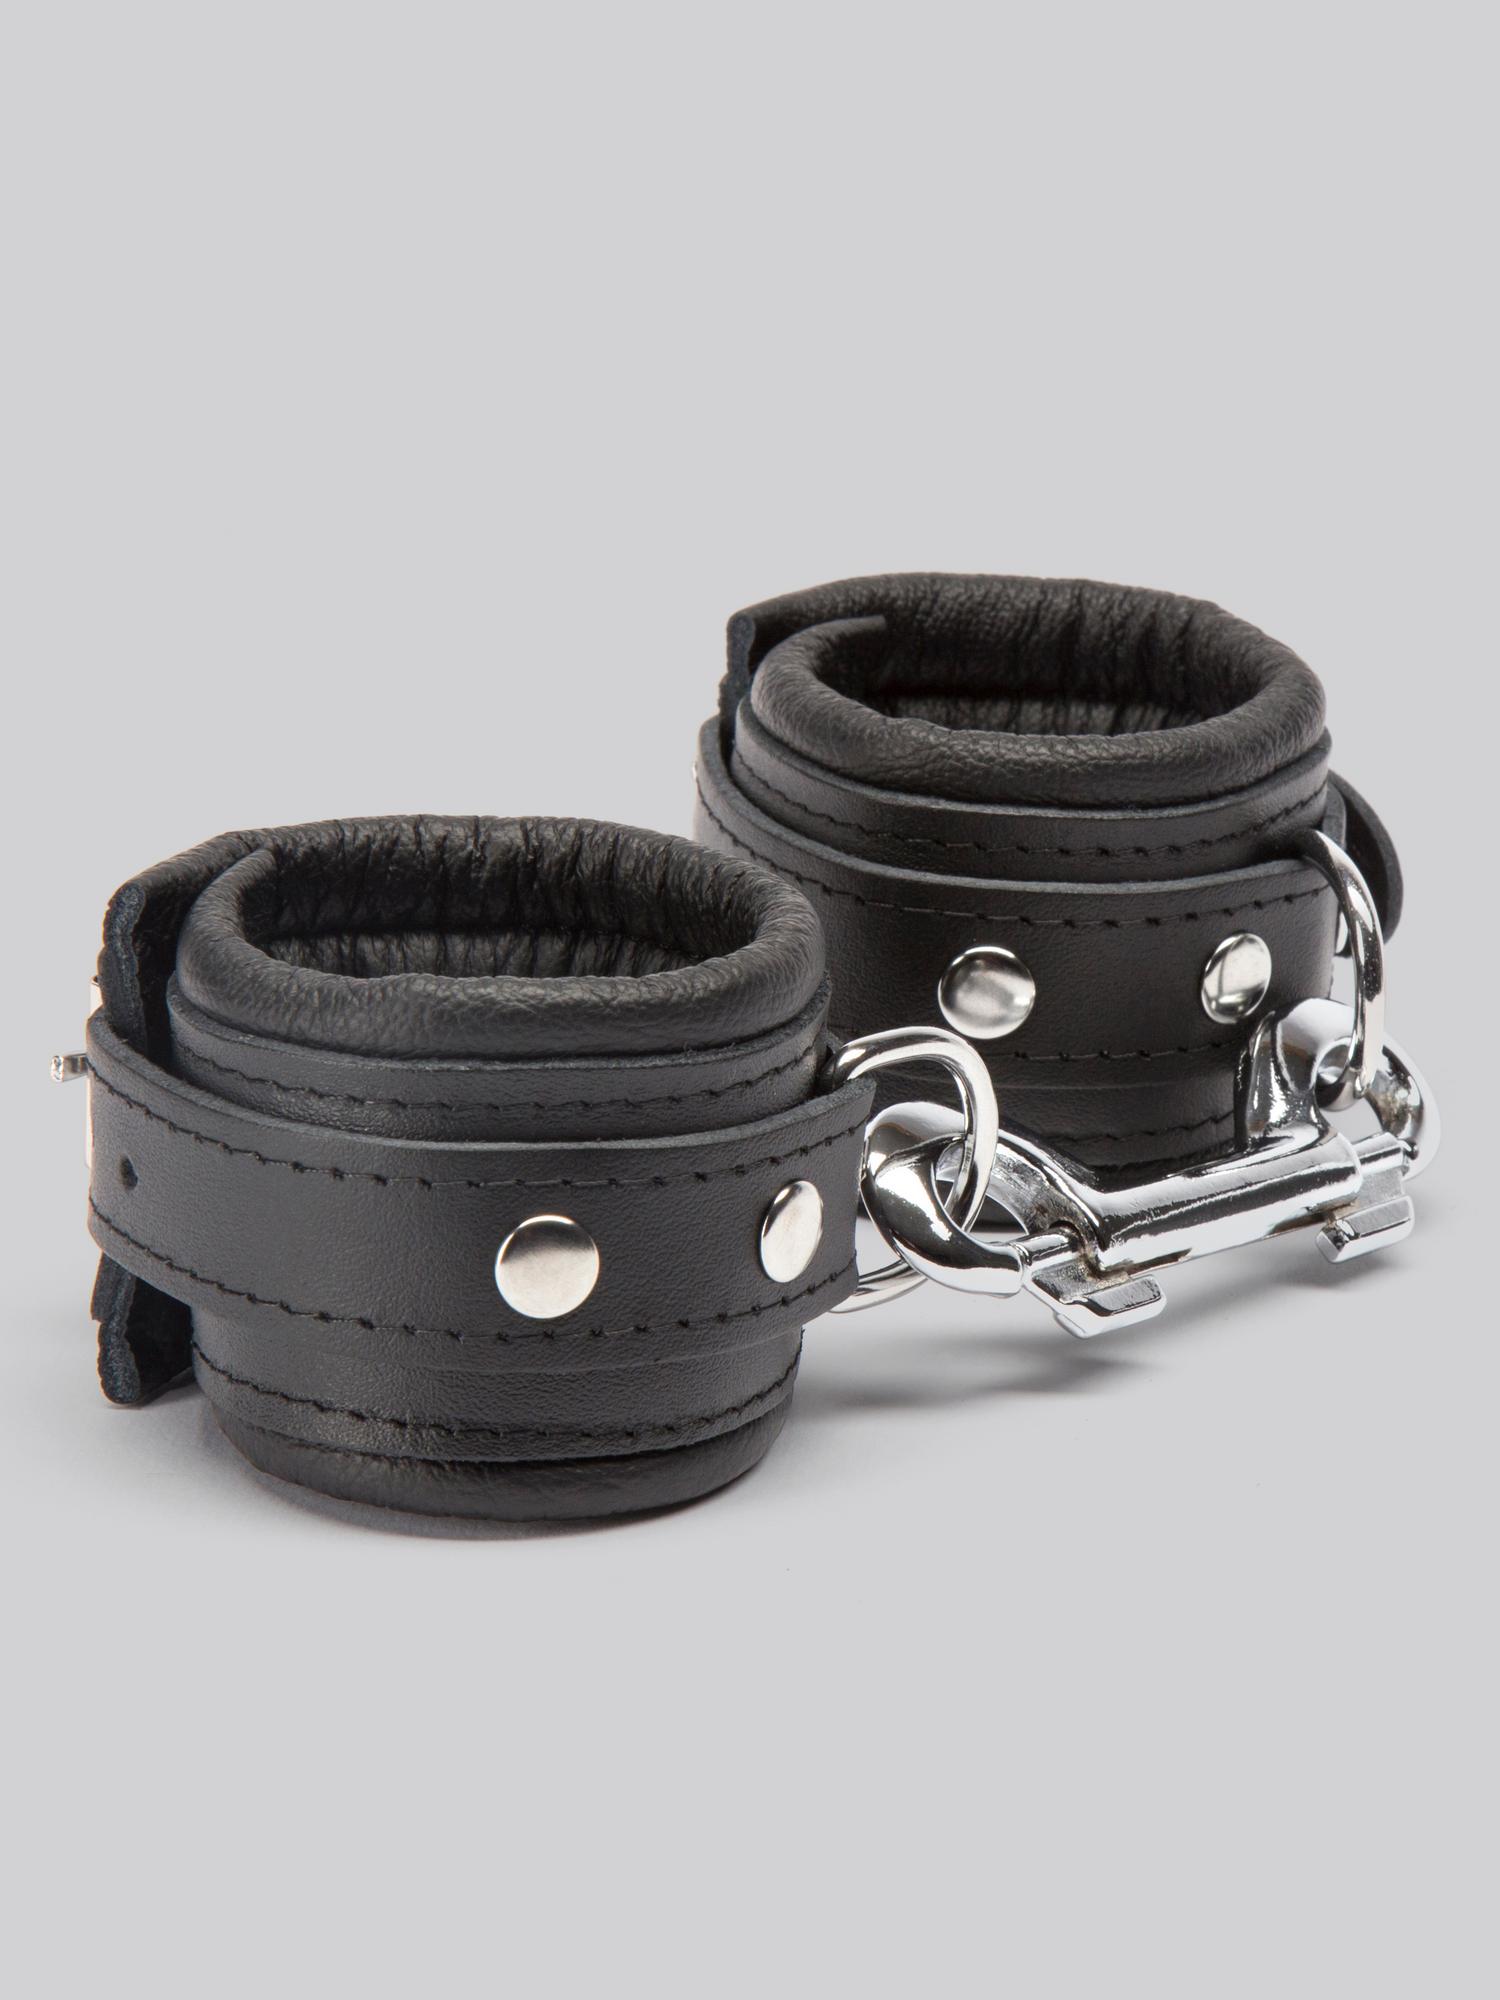 DOMINIX Deluxe Leather Wrist Cuffs. Slide 3